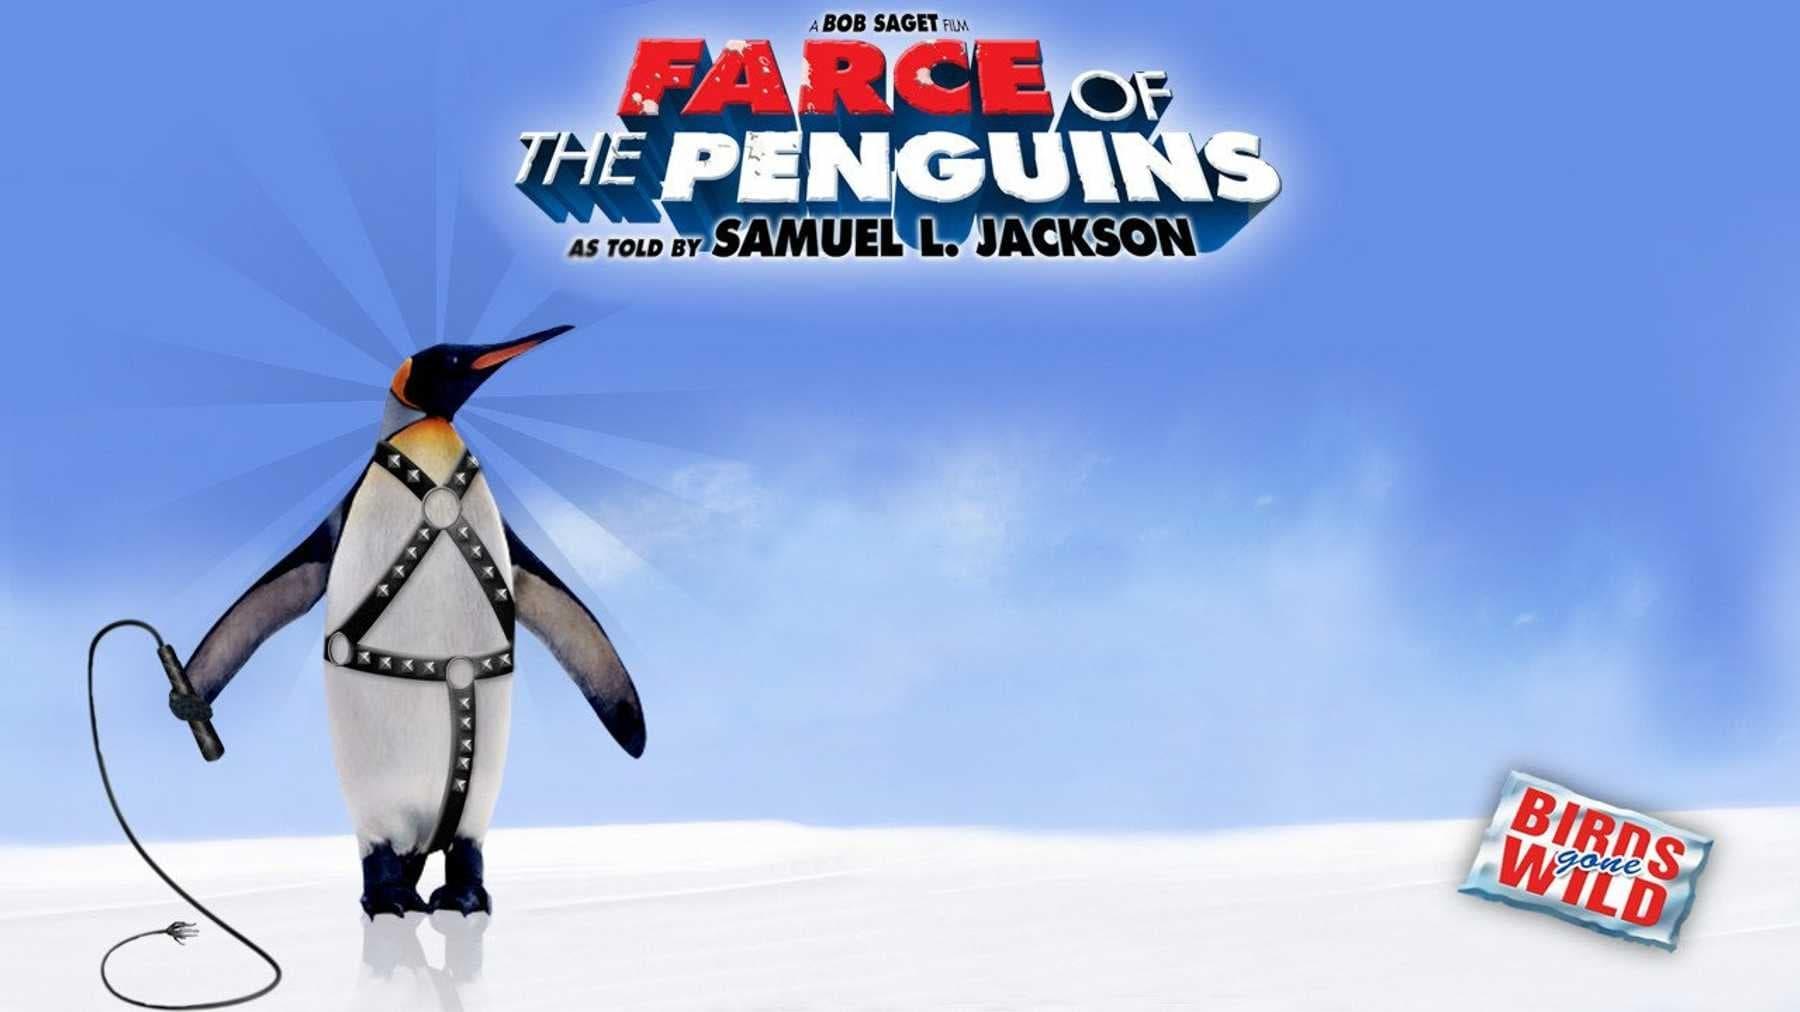 Farce of the Penguins backdrop